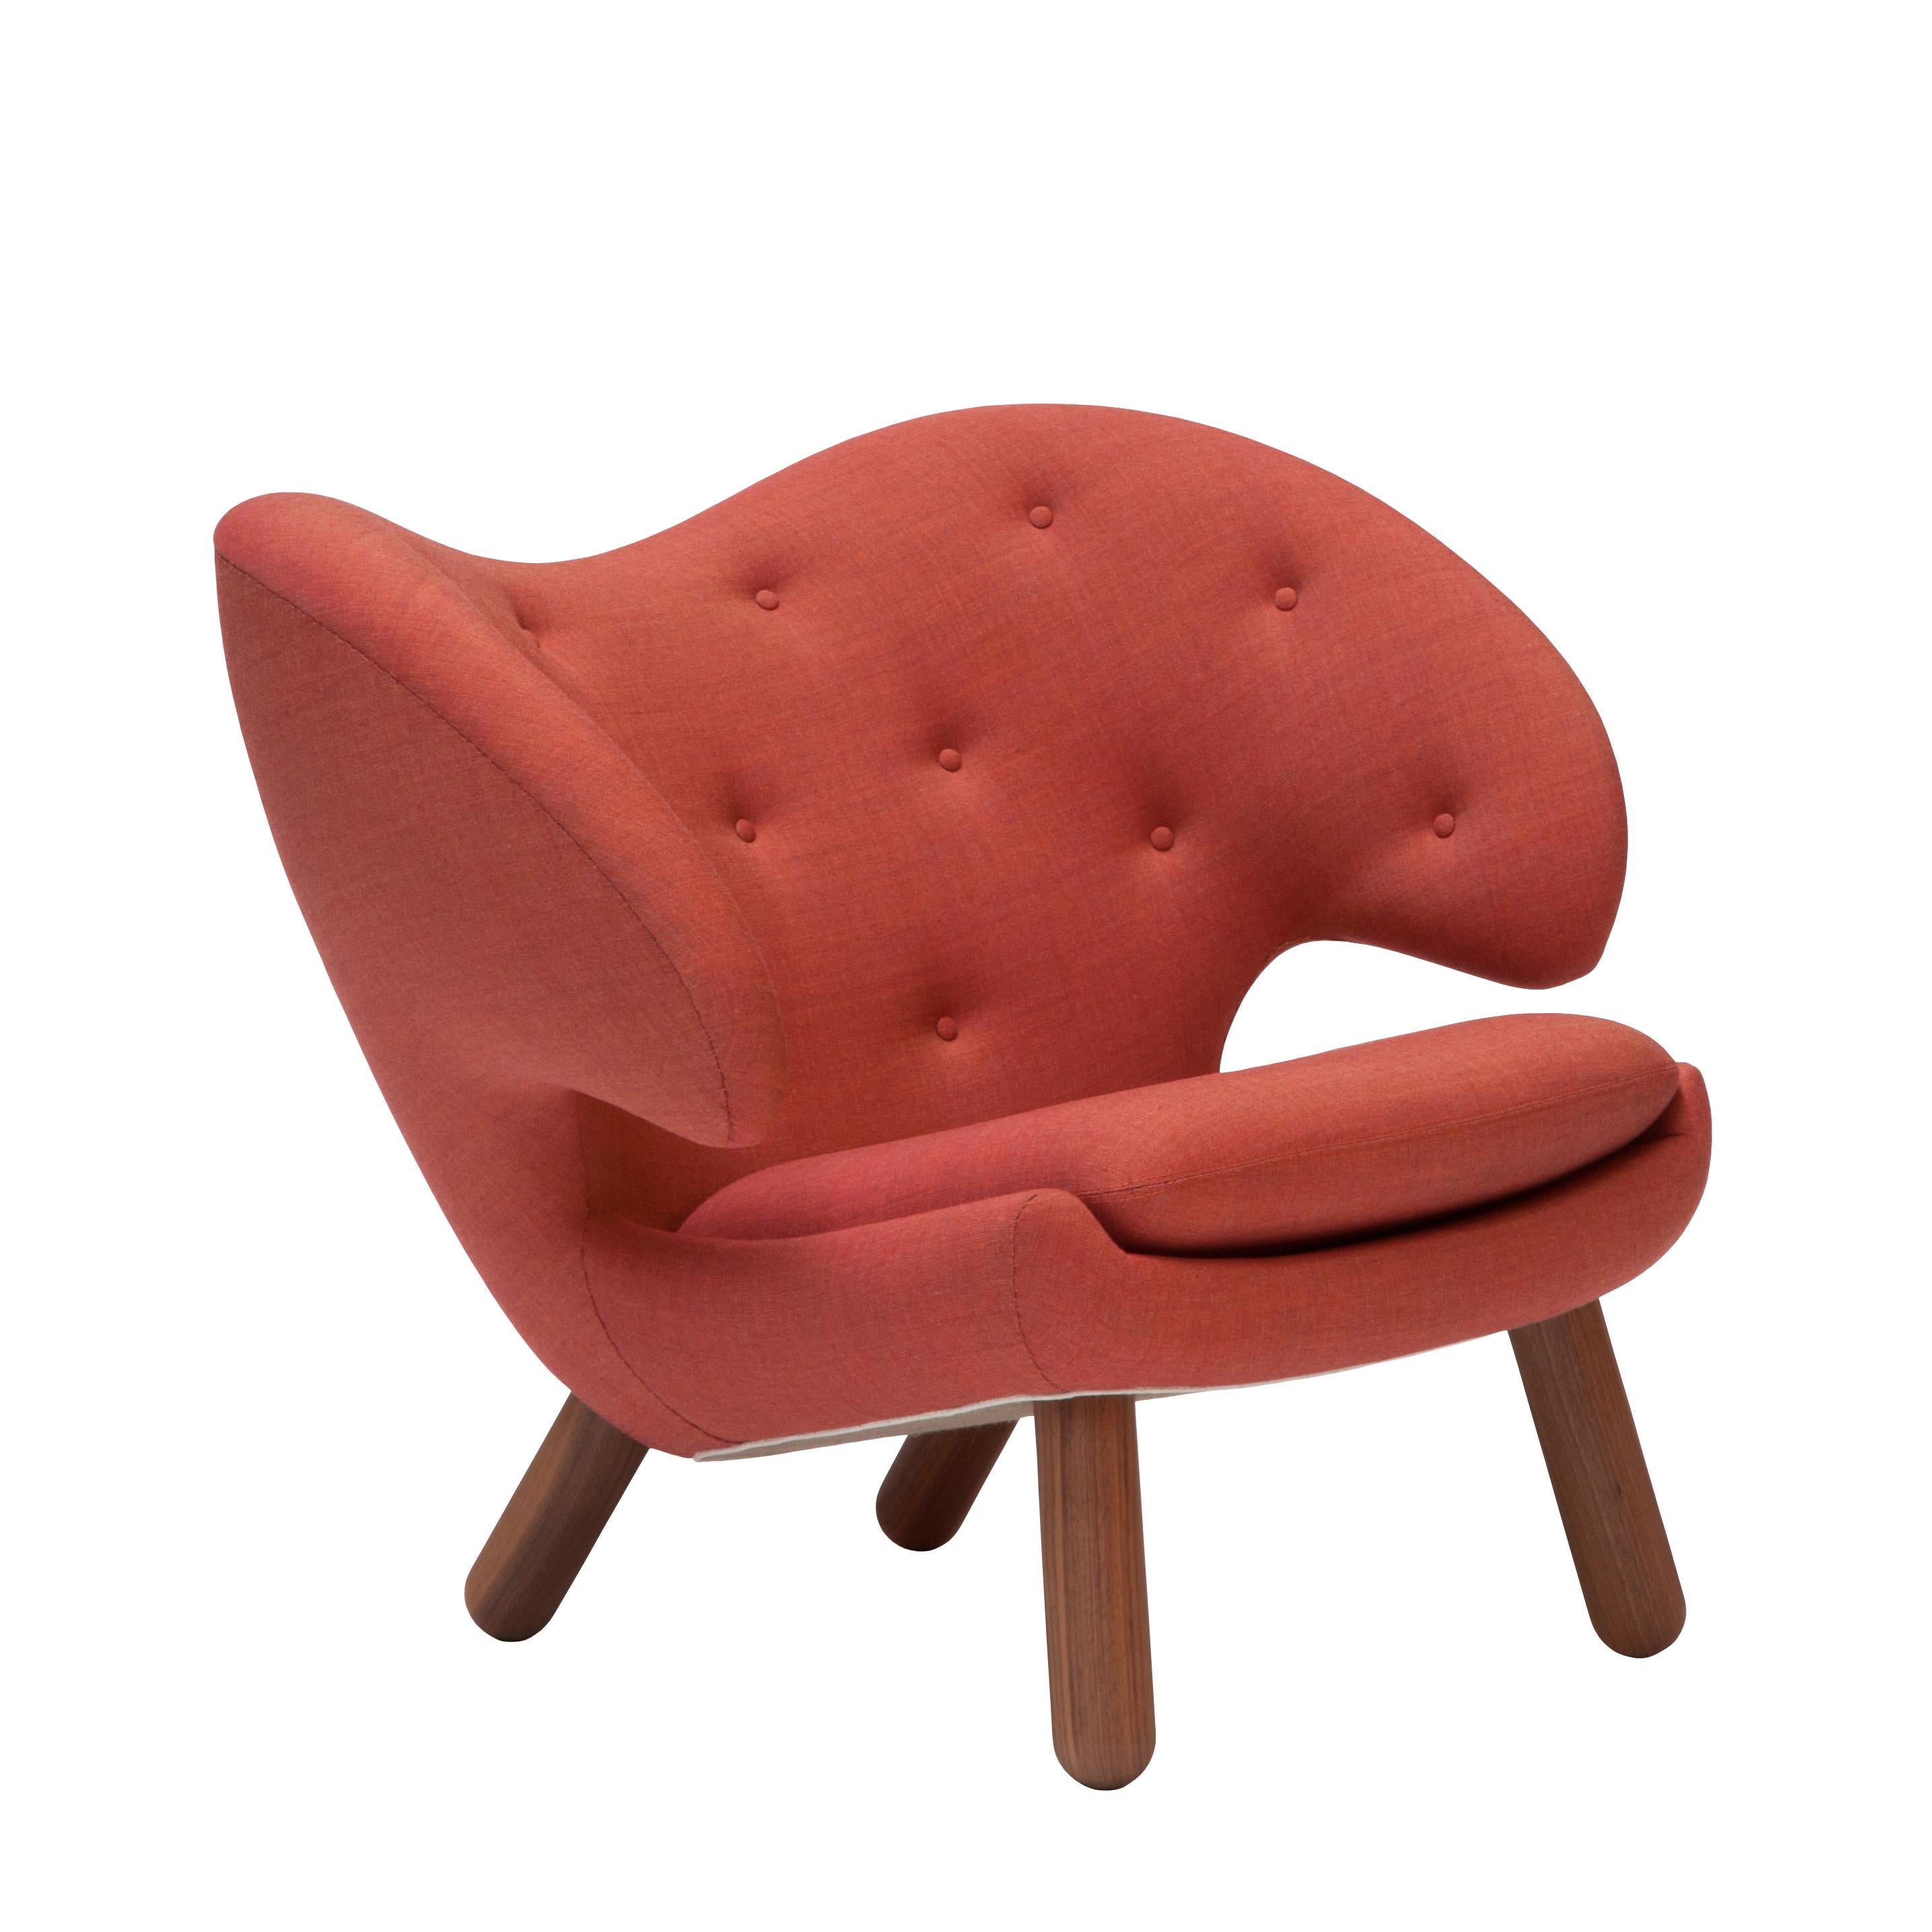 Finn Juhl Pelican Chair Upholstered in Red Kvadrat Remix Fabric 1